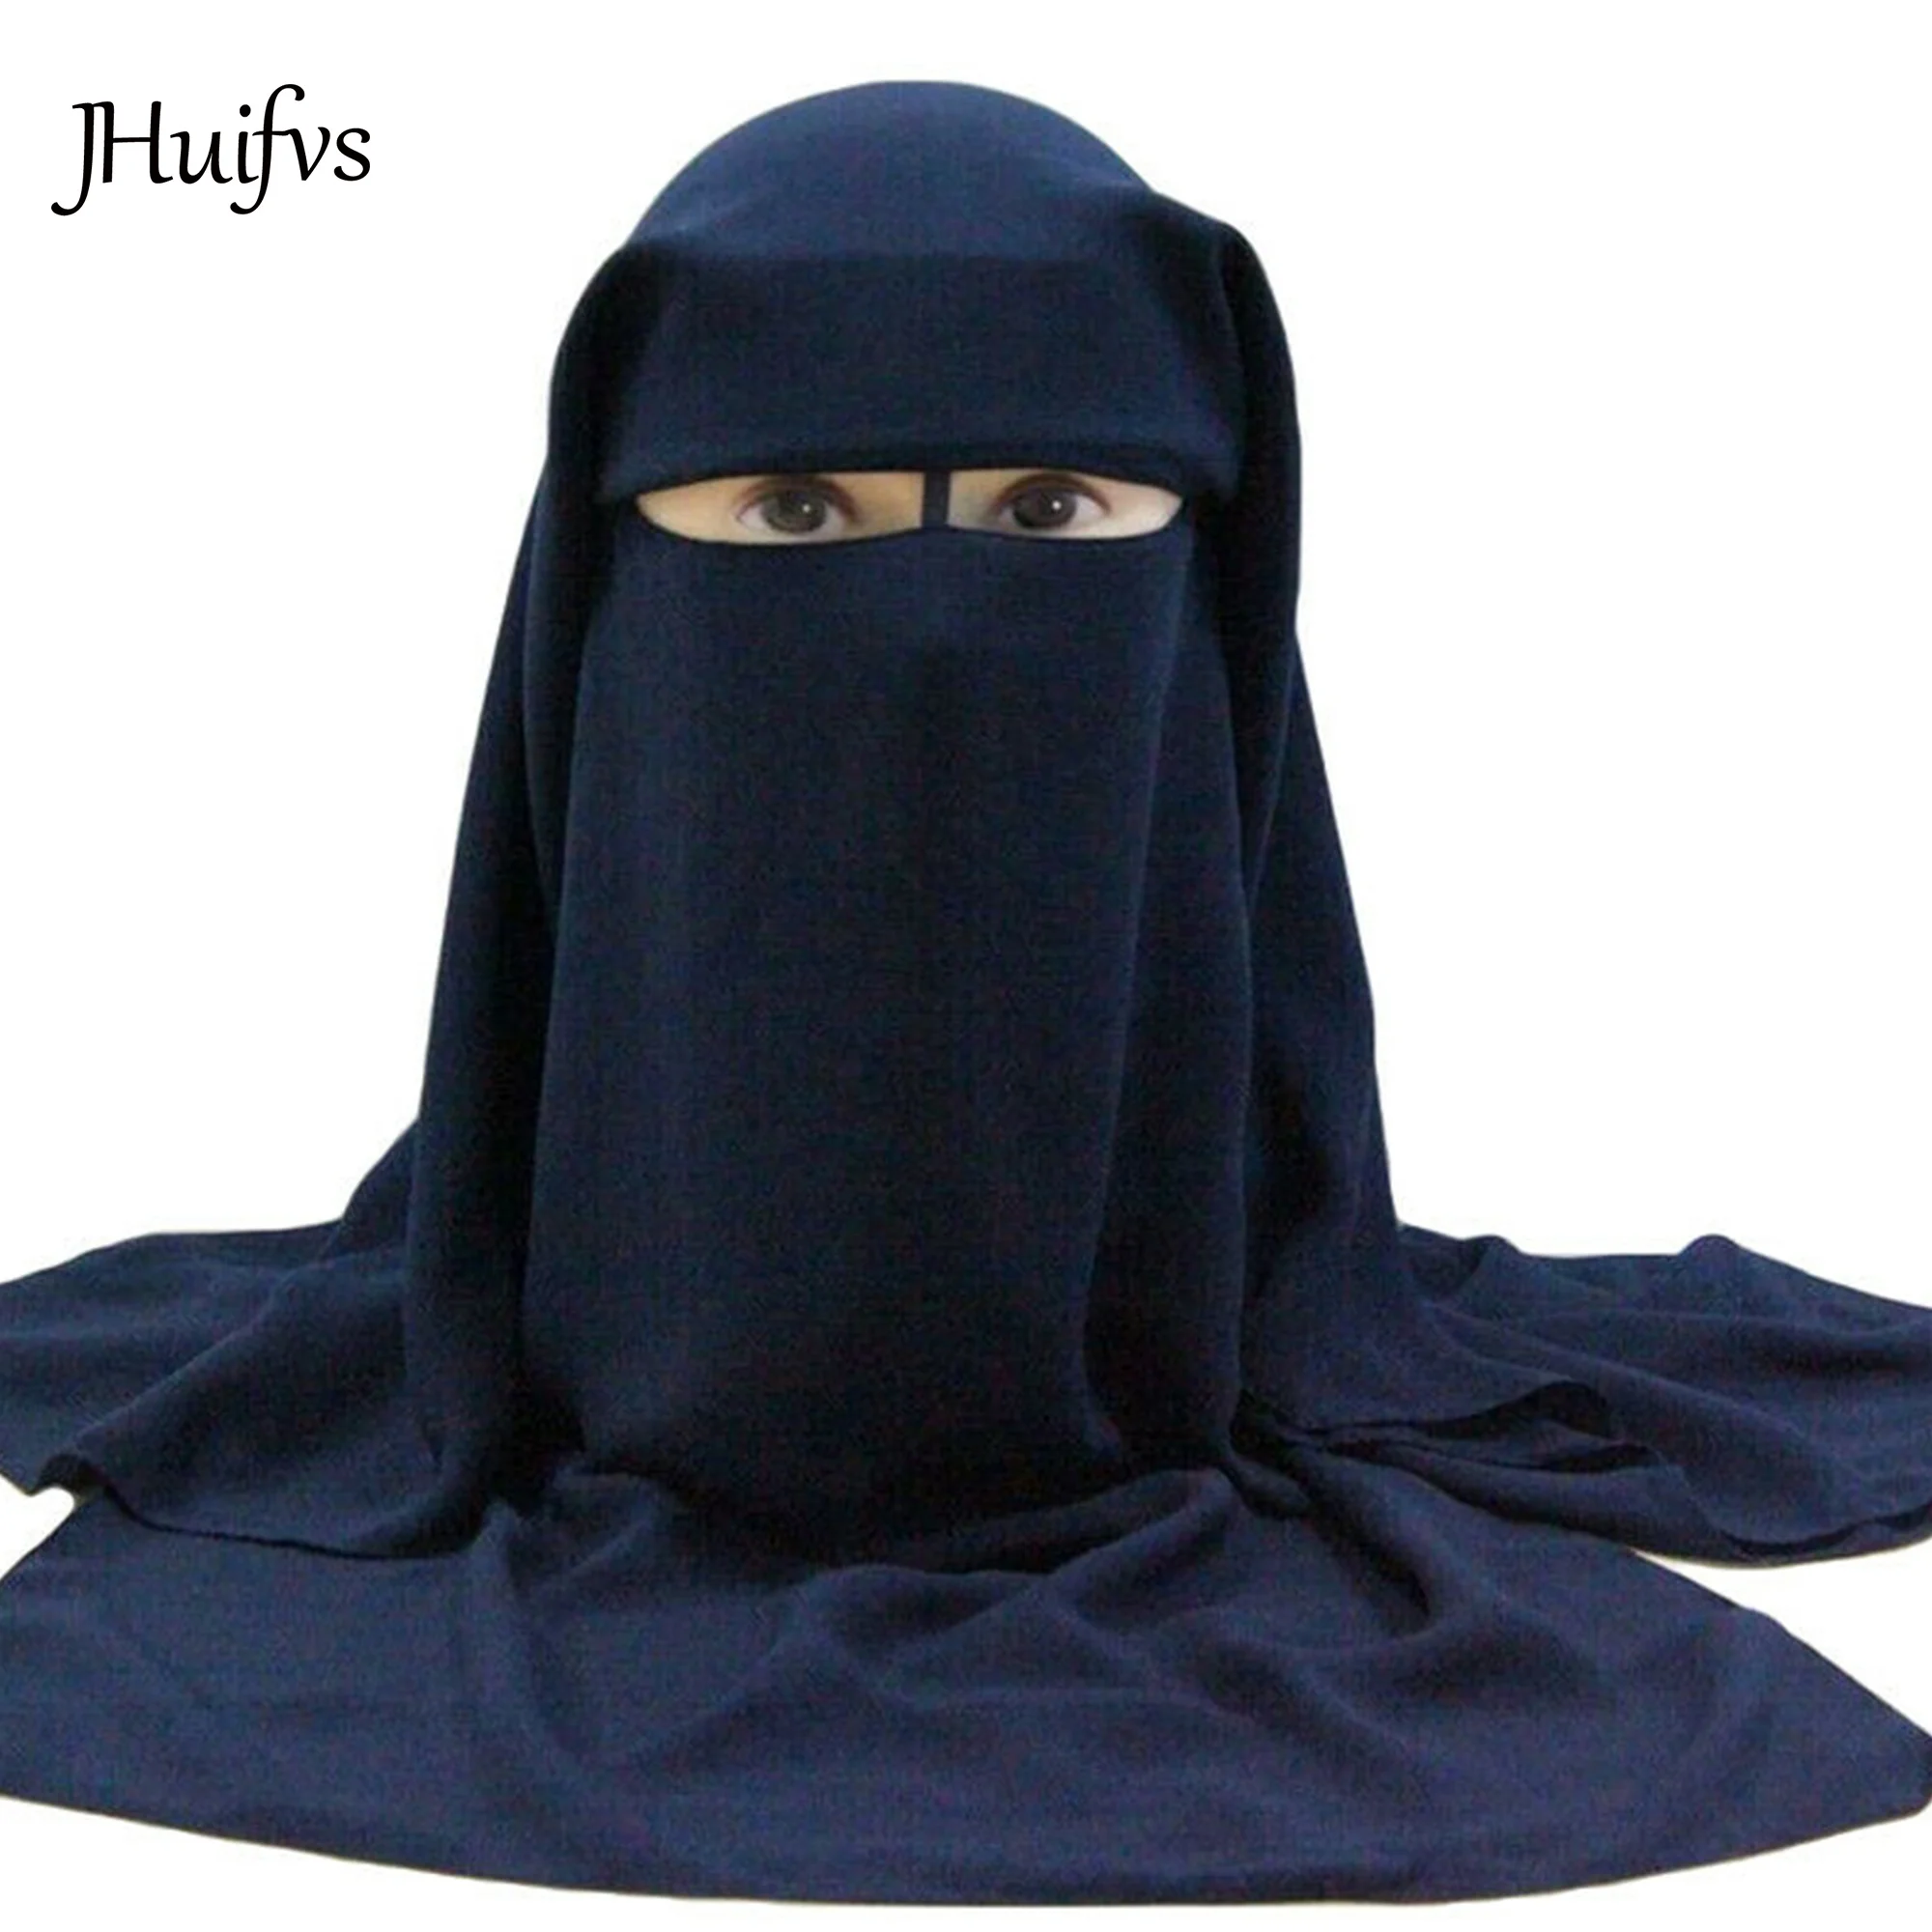 

High Quality Fashion Solid Color Islamic Niqab Face Cover Veil Muslim Women Hooded Full Long Hijab Arab Burqa, Colorful